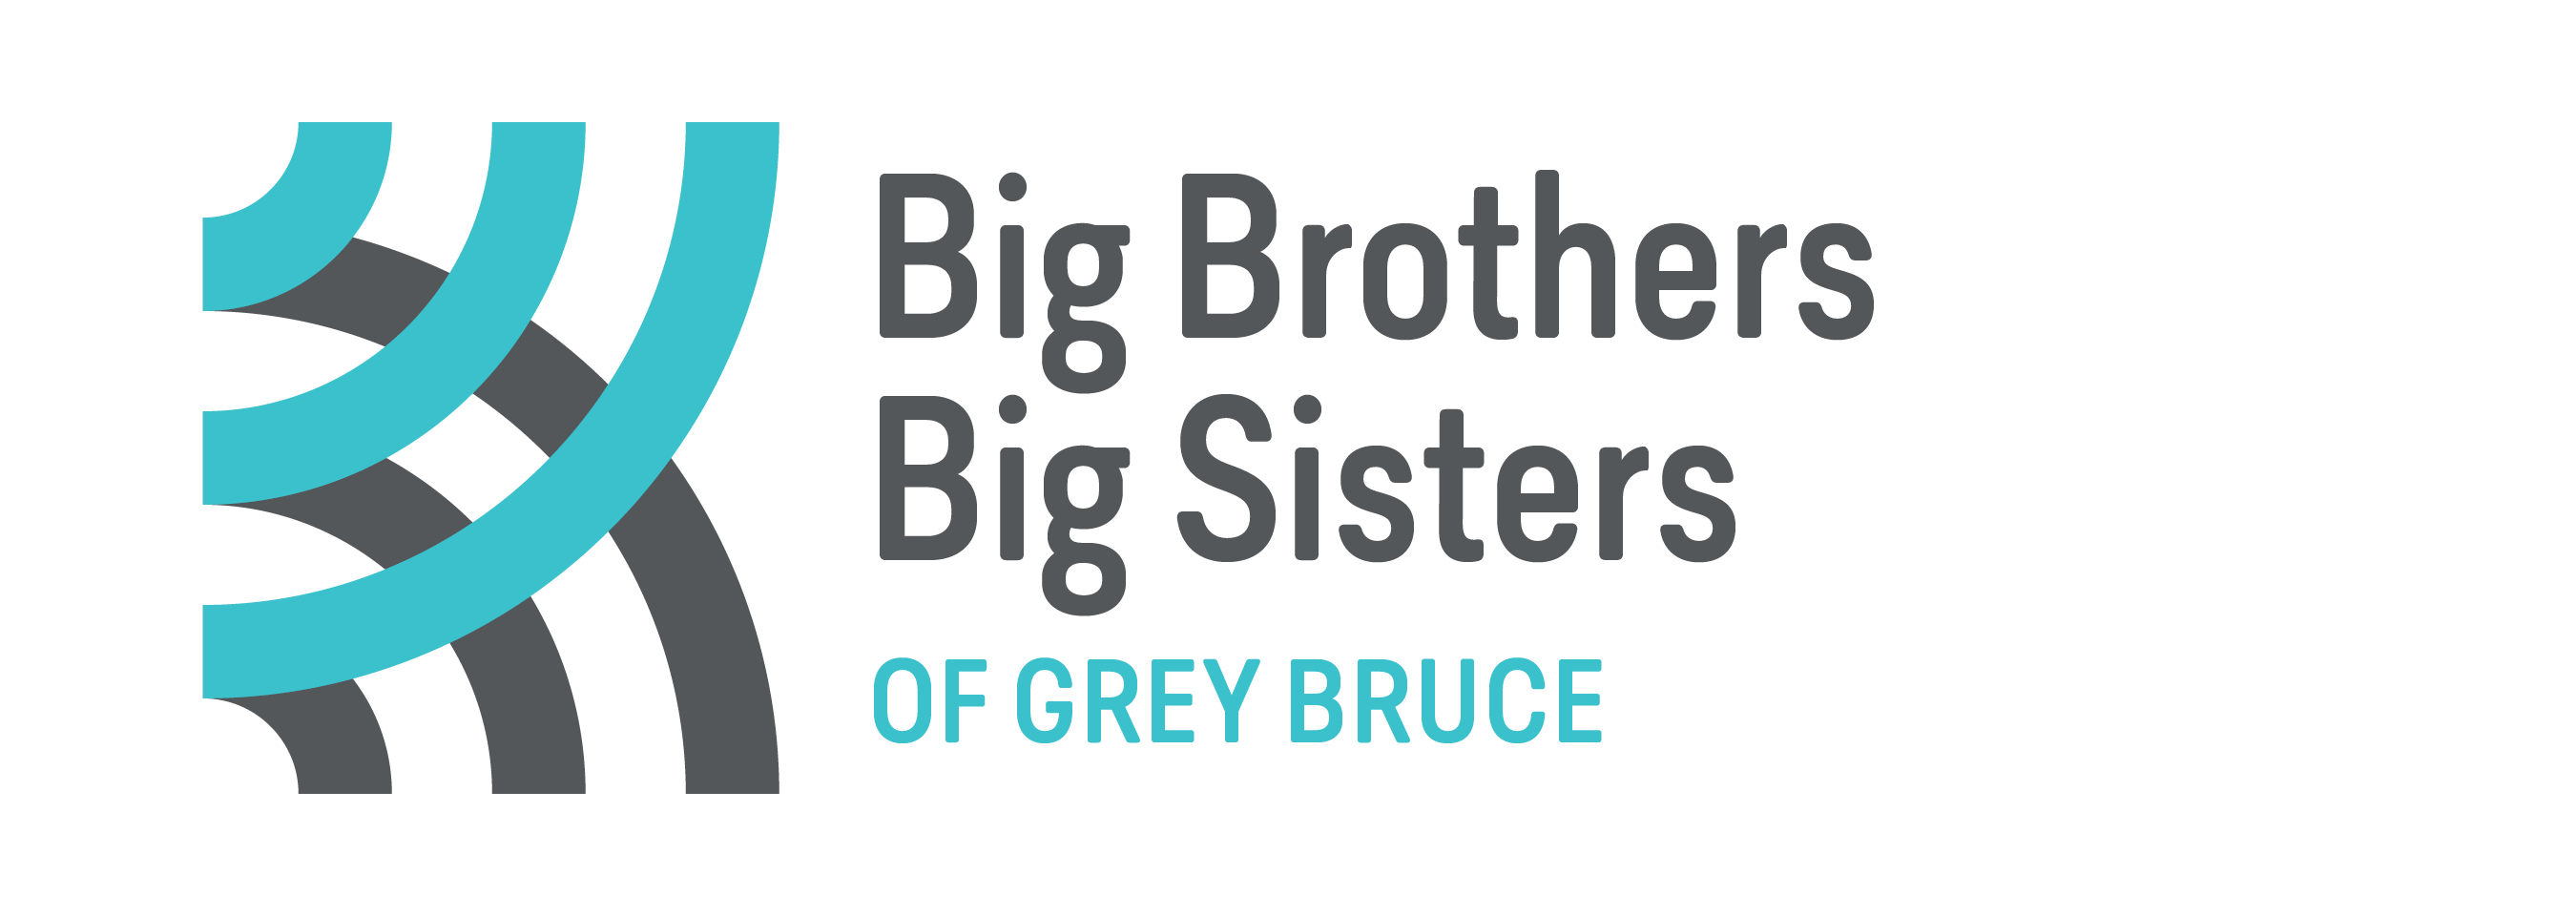 BIG BROTHERS BIG SISTERS OF GREY BRUCE logo